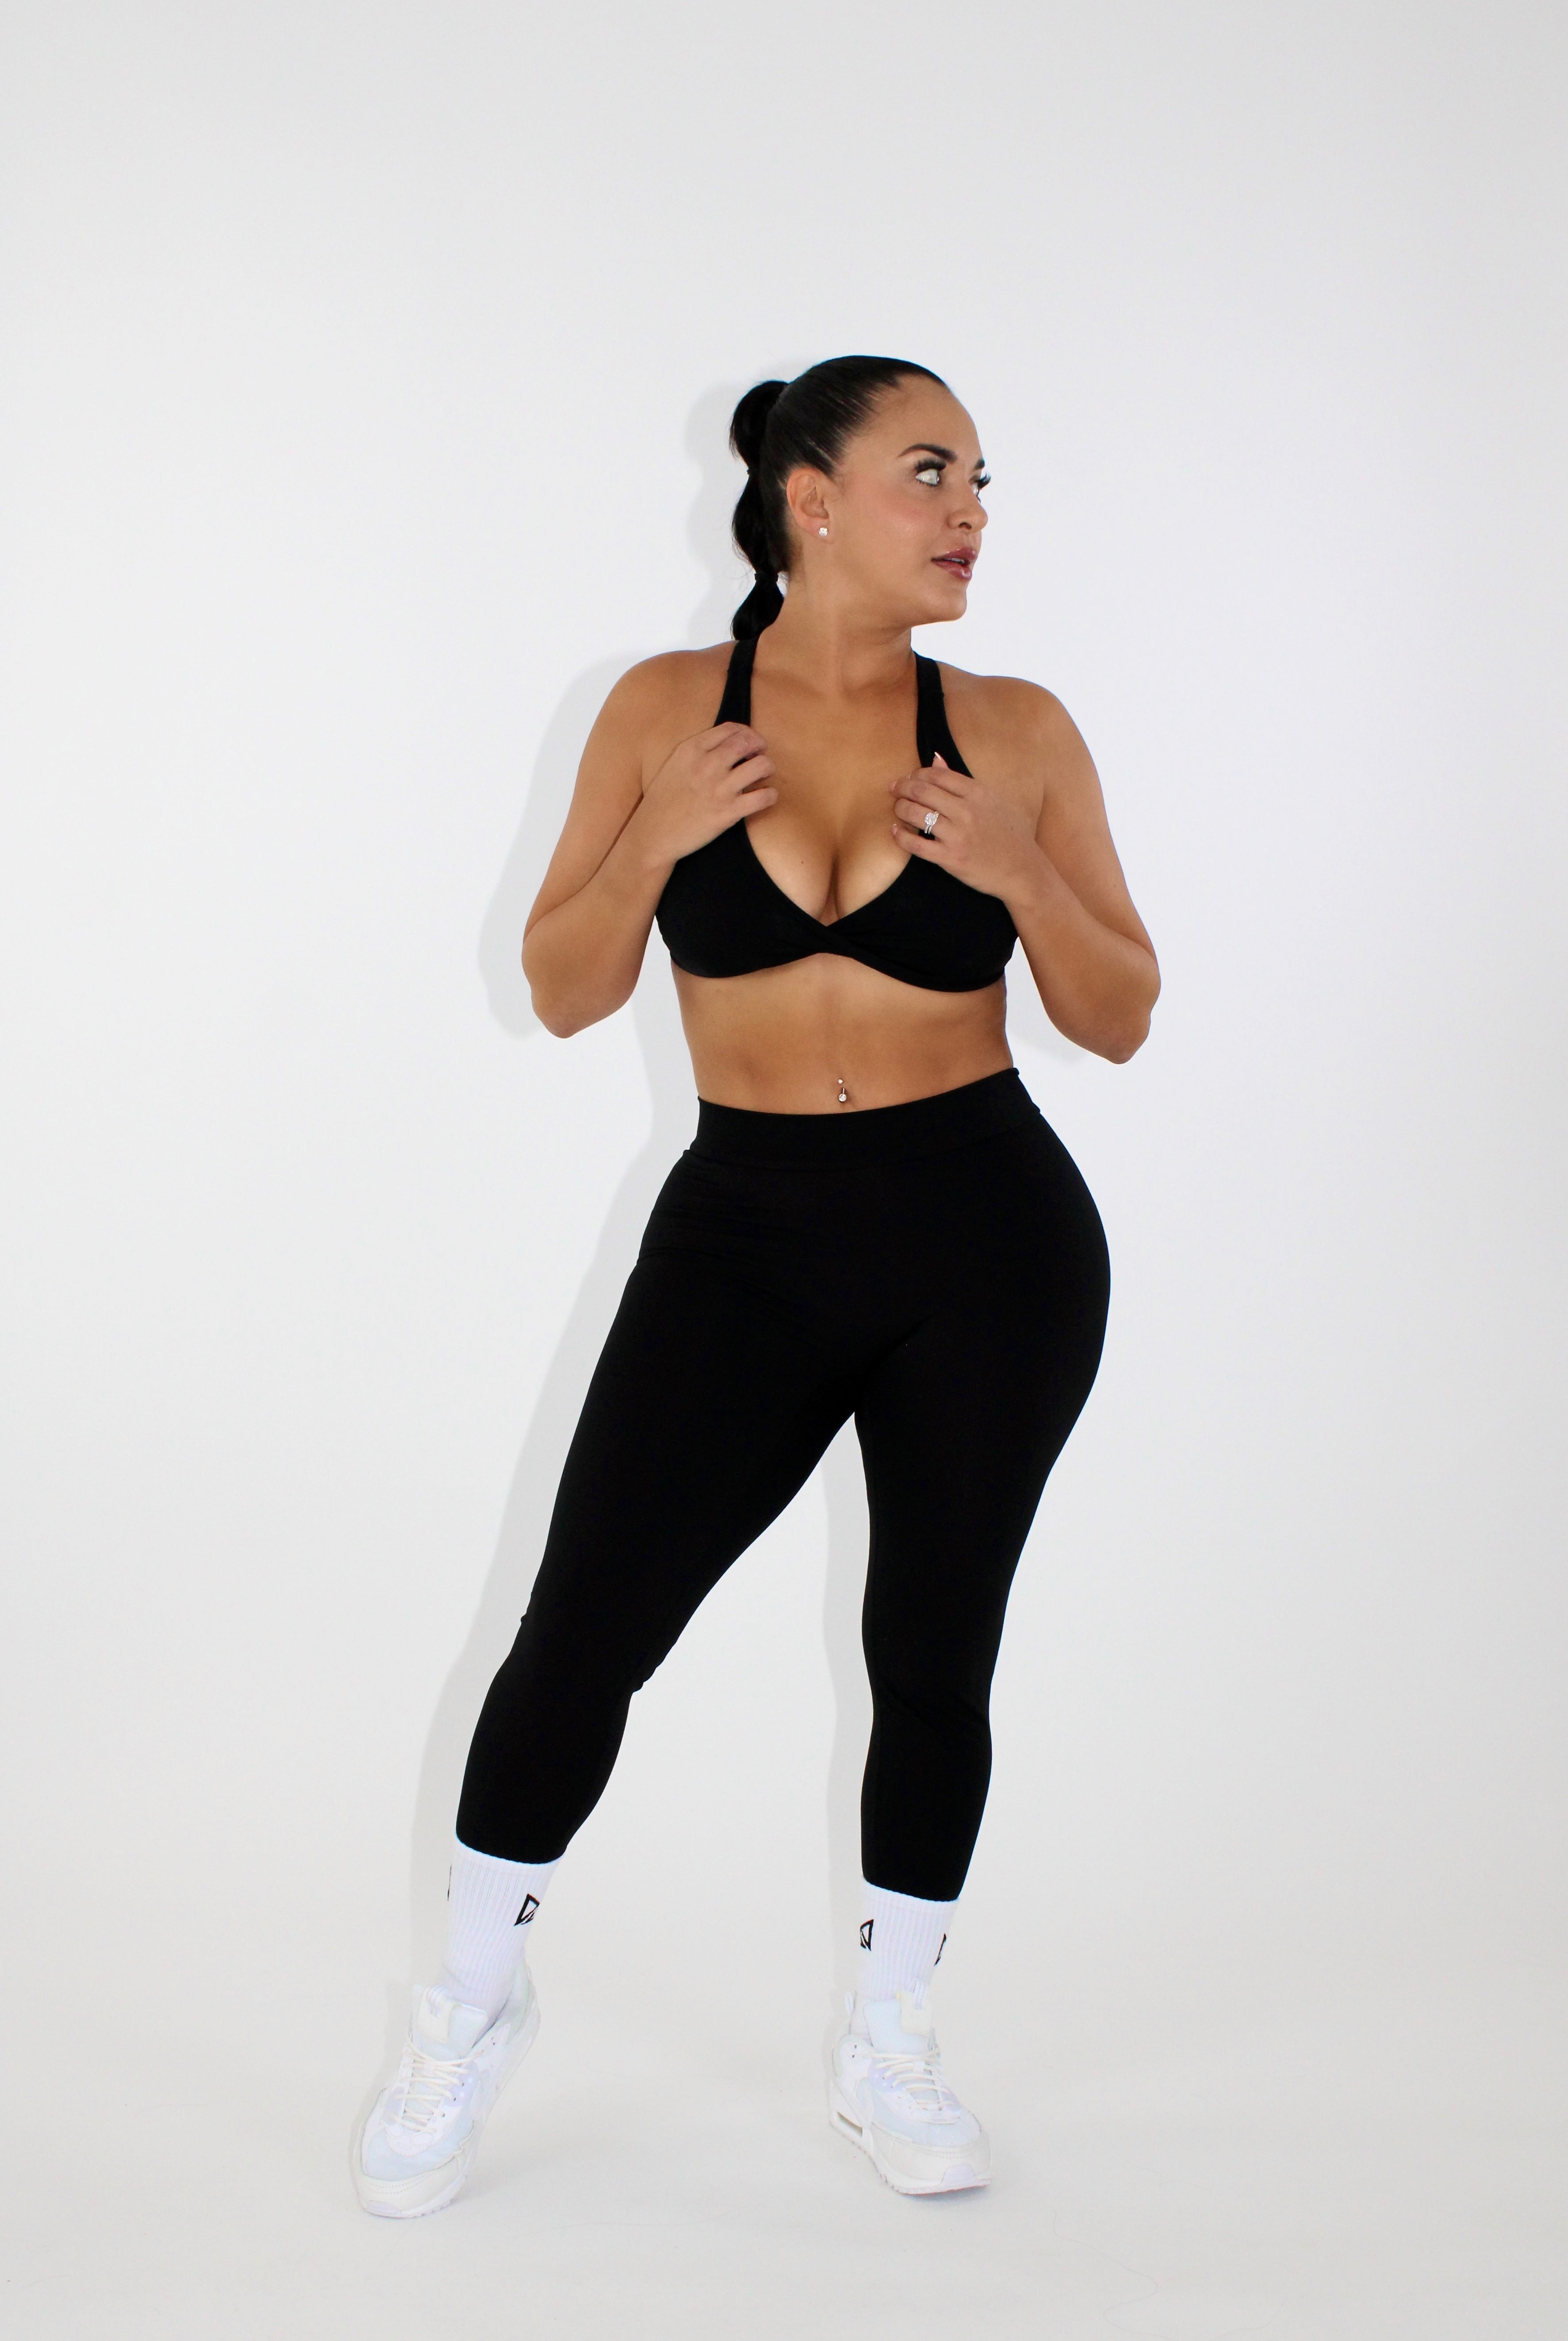 Woman wearing black leggings and a black sports bra